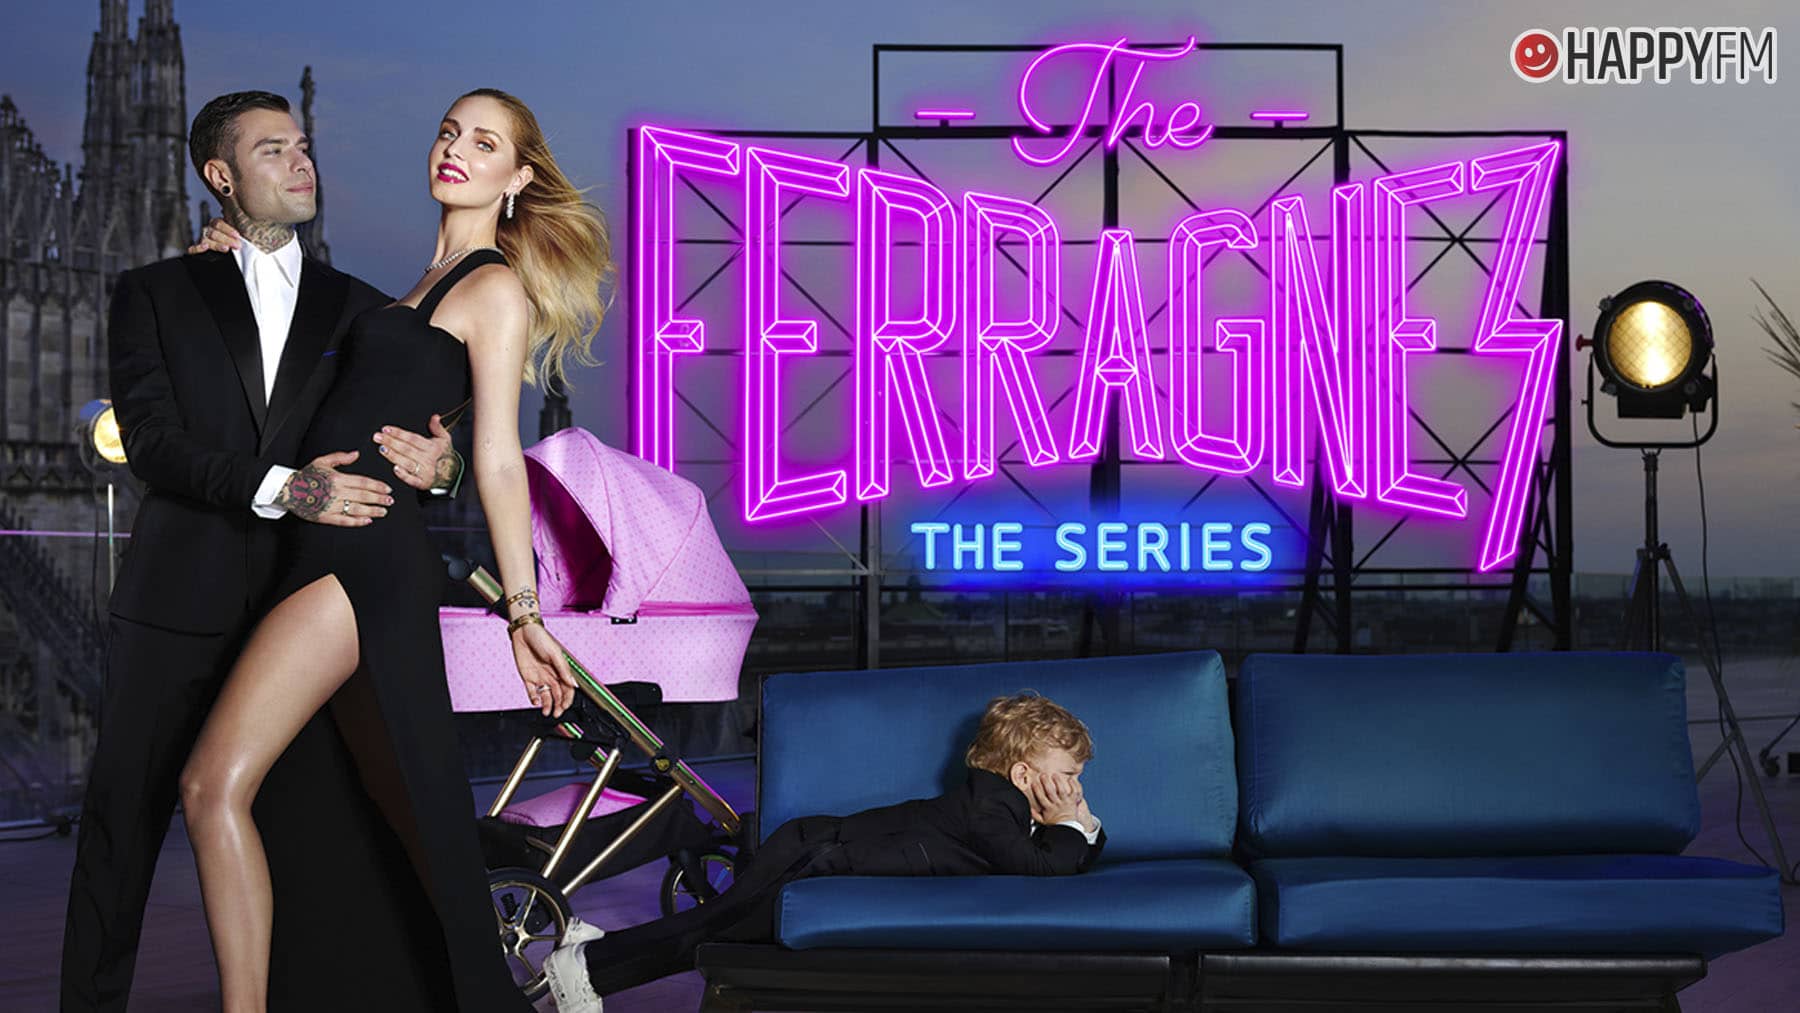 ‘The Ferragnez’: Dónde ver la serie de Chiara Ferragni y Fedez online loading=